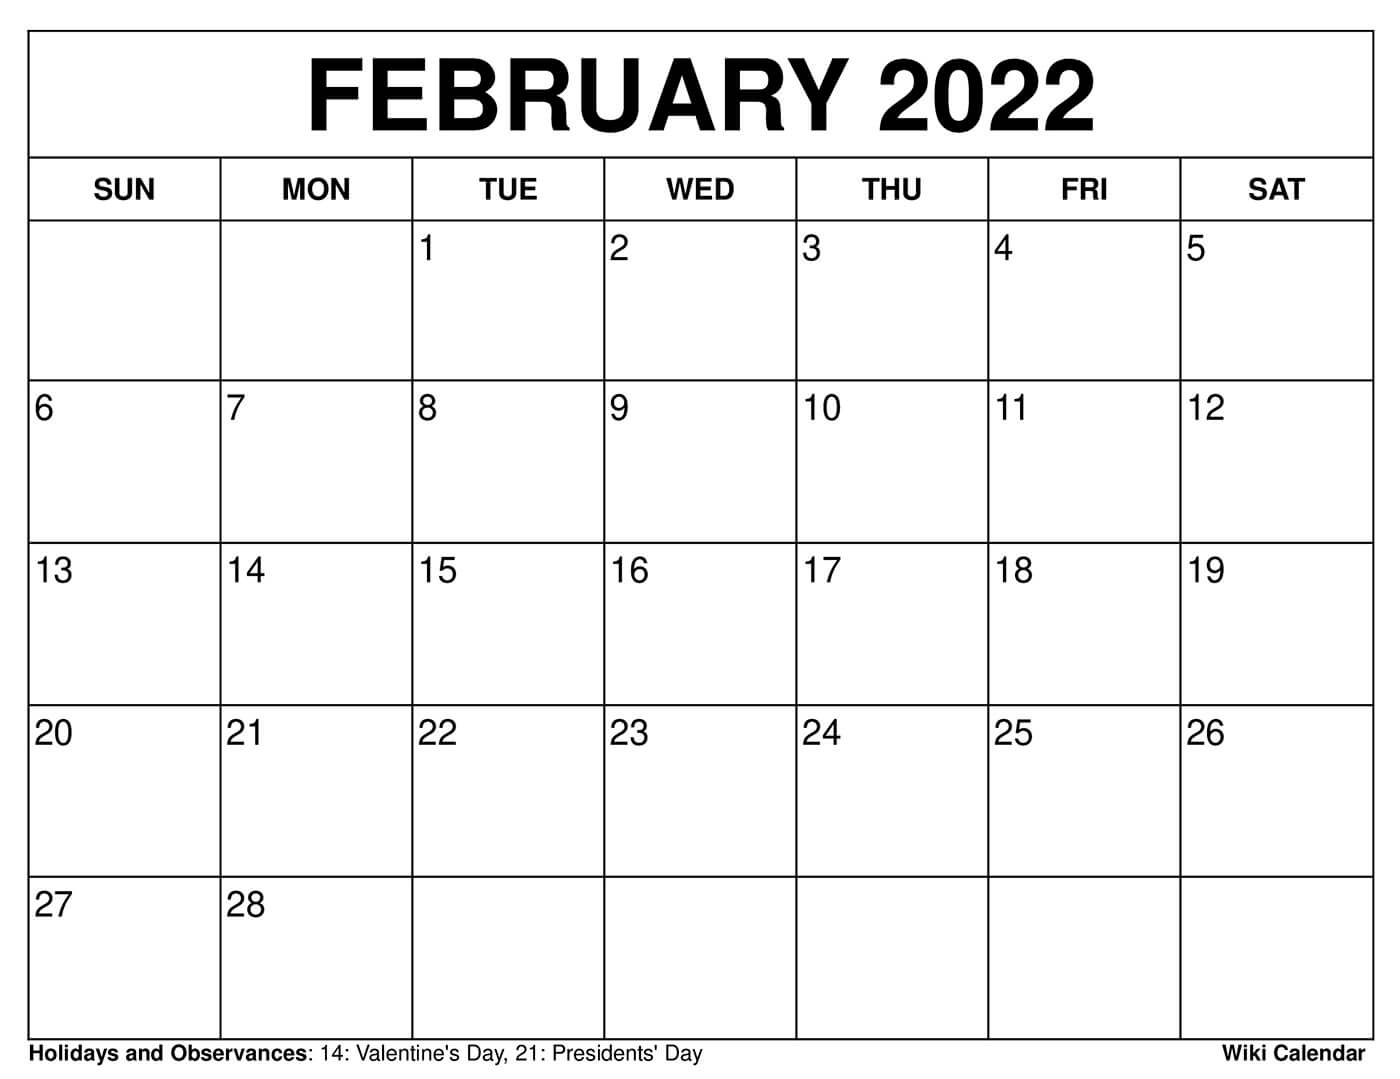 Wiki Calendar February 2022 With Holidays.Free Printable February 2022 Calendars Wiki Calendar